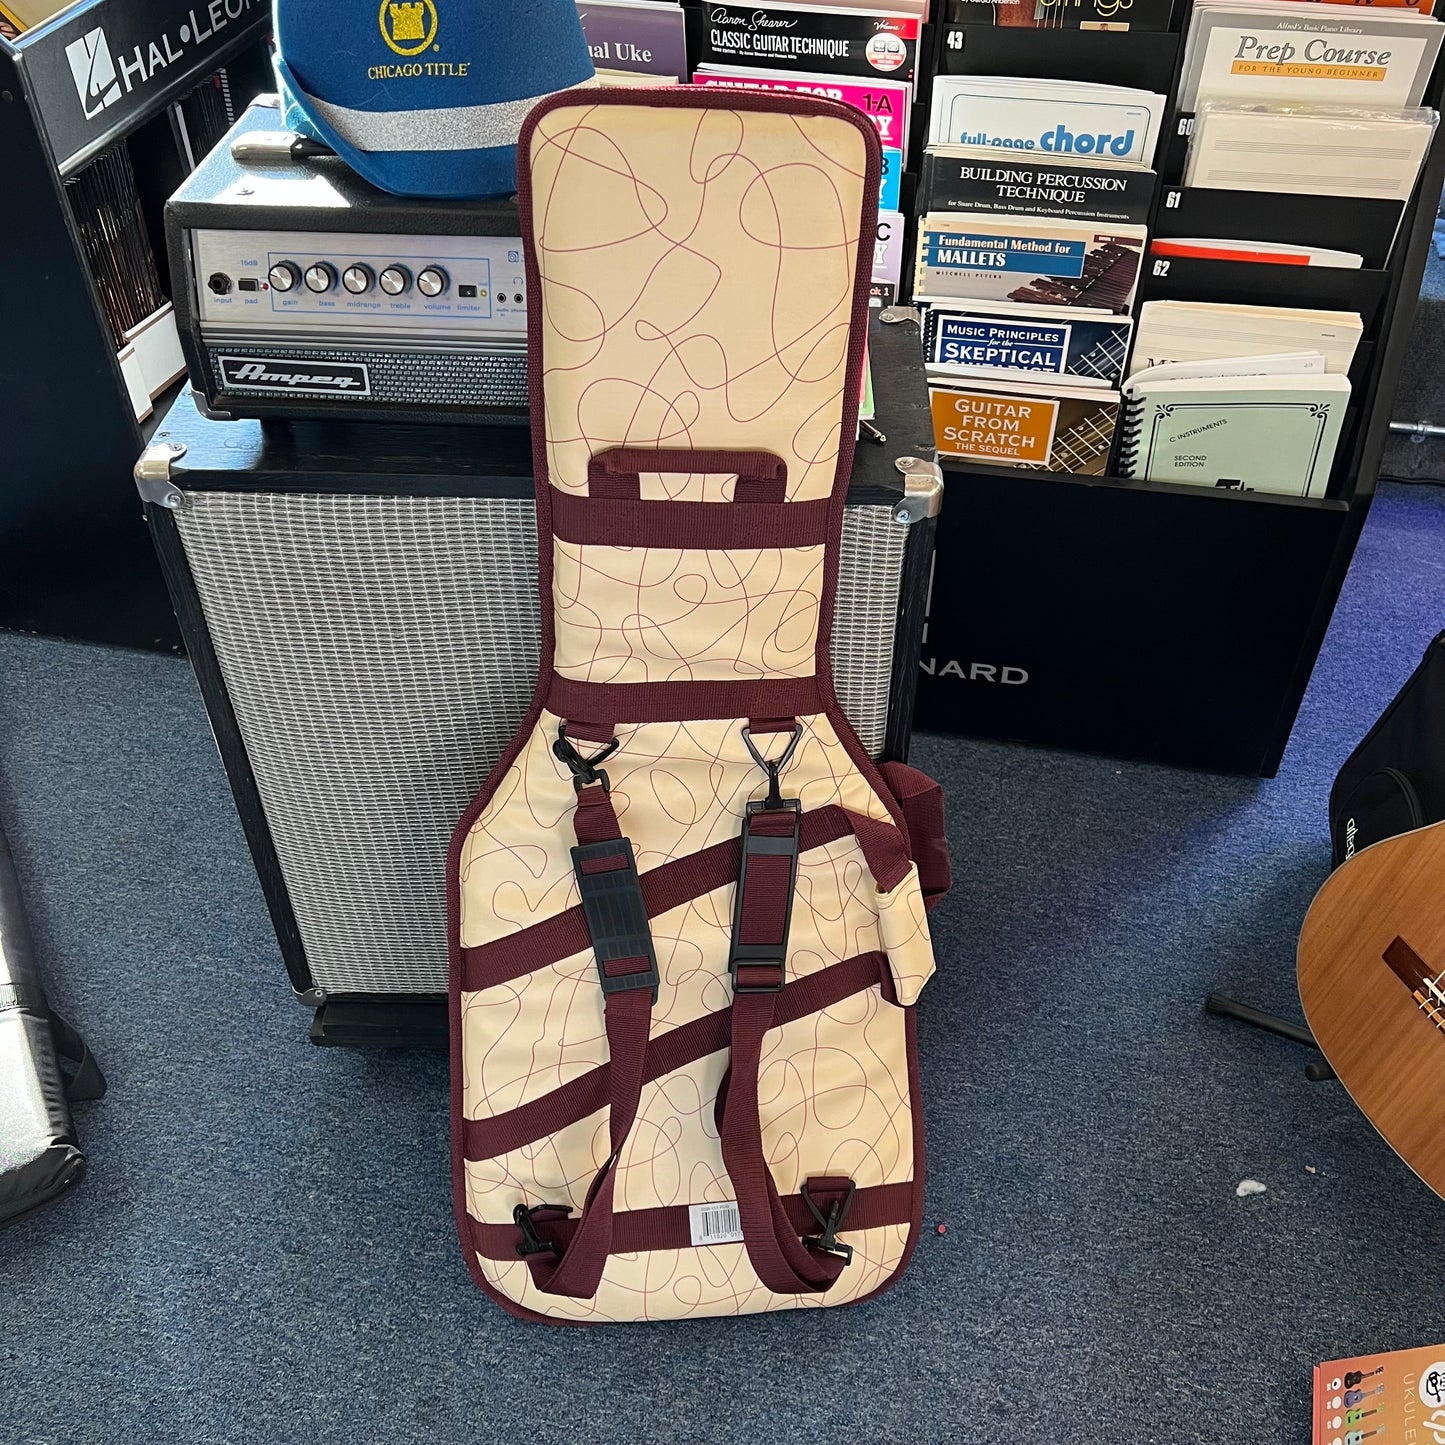 Danelectro ampinabag - BAG ONLY - Like New Electric Guitar Bag